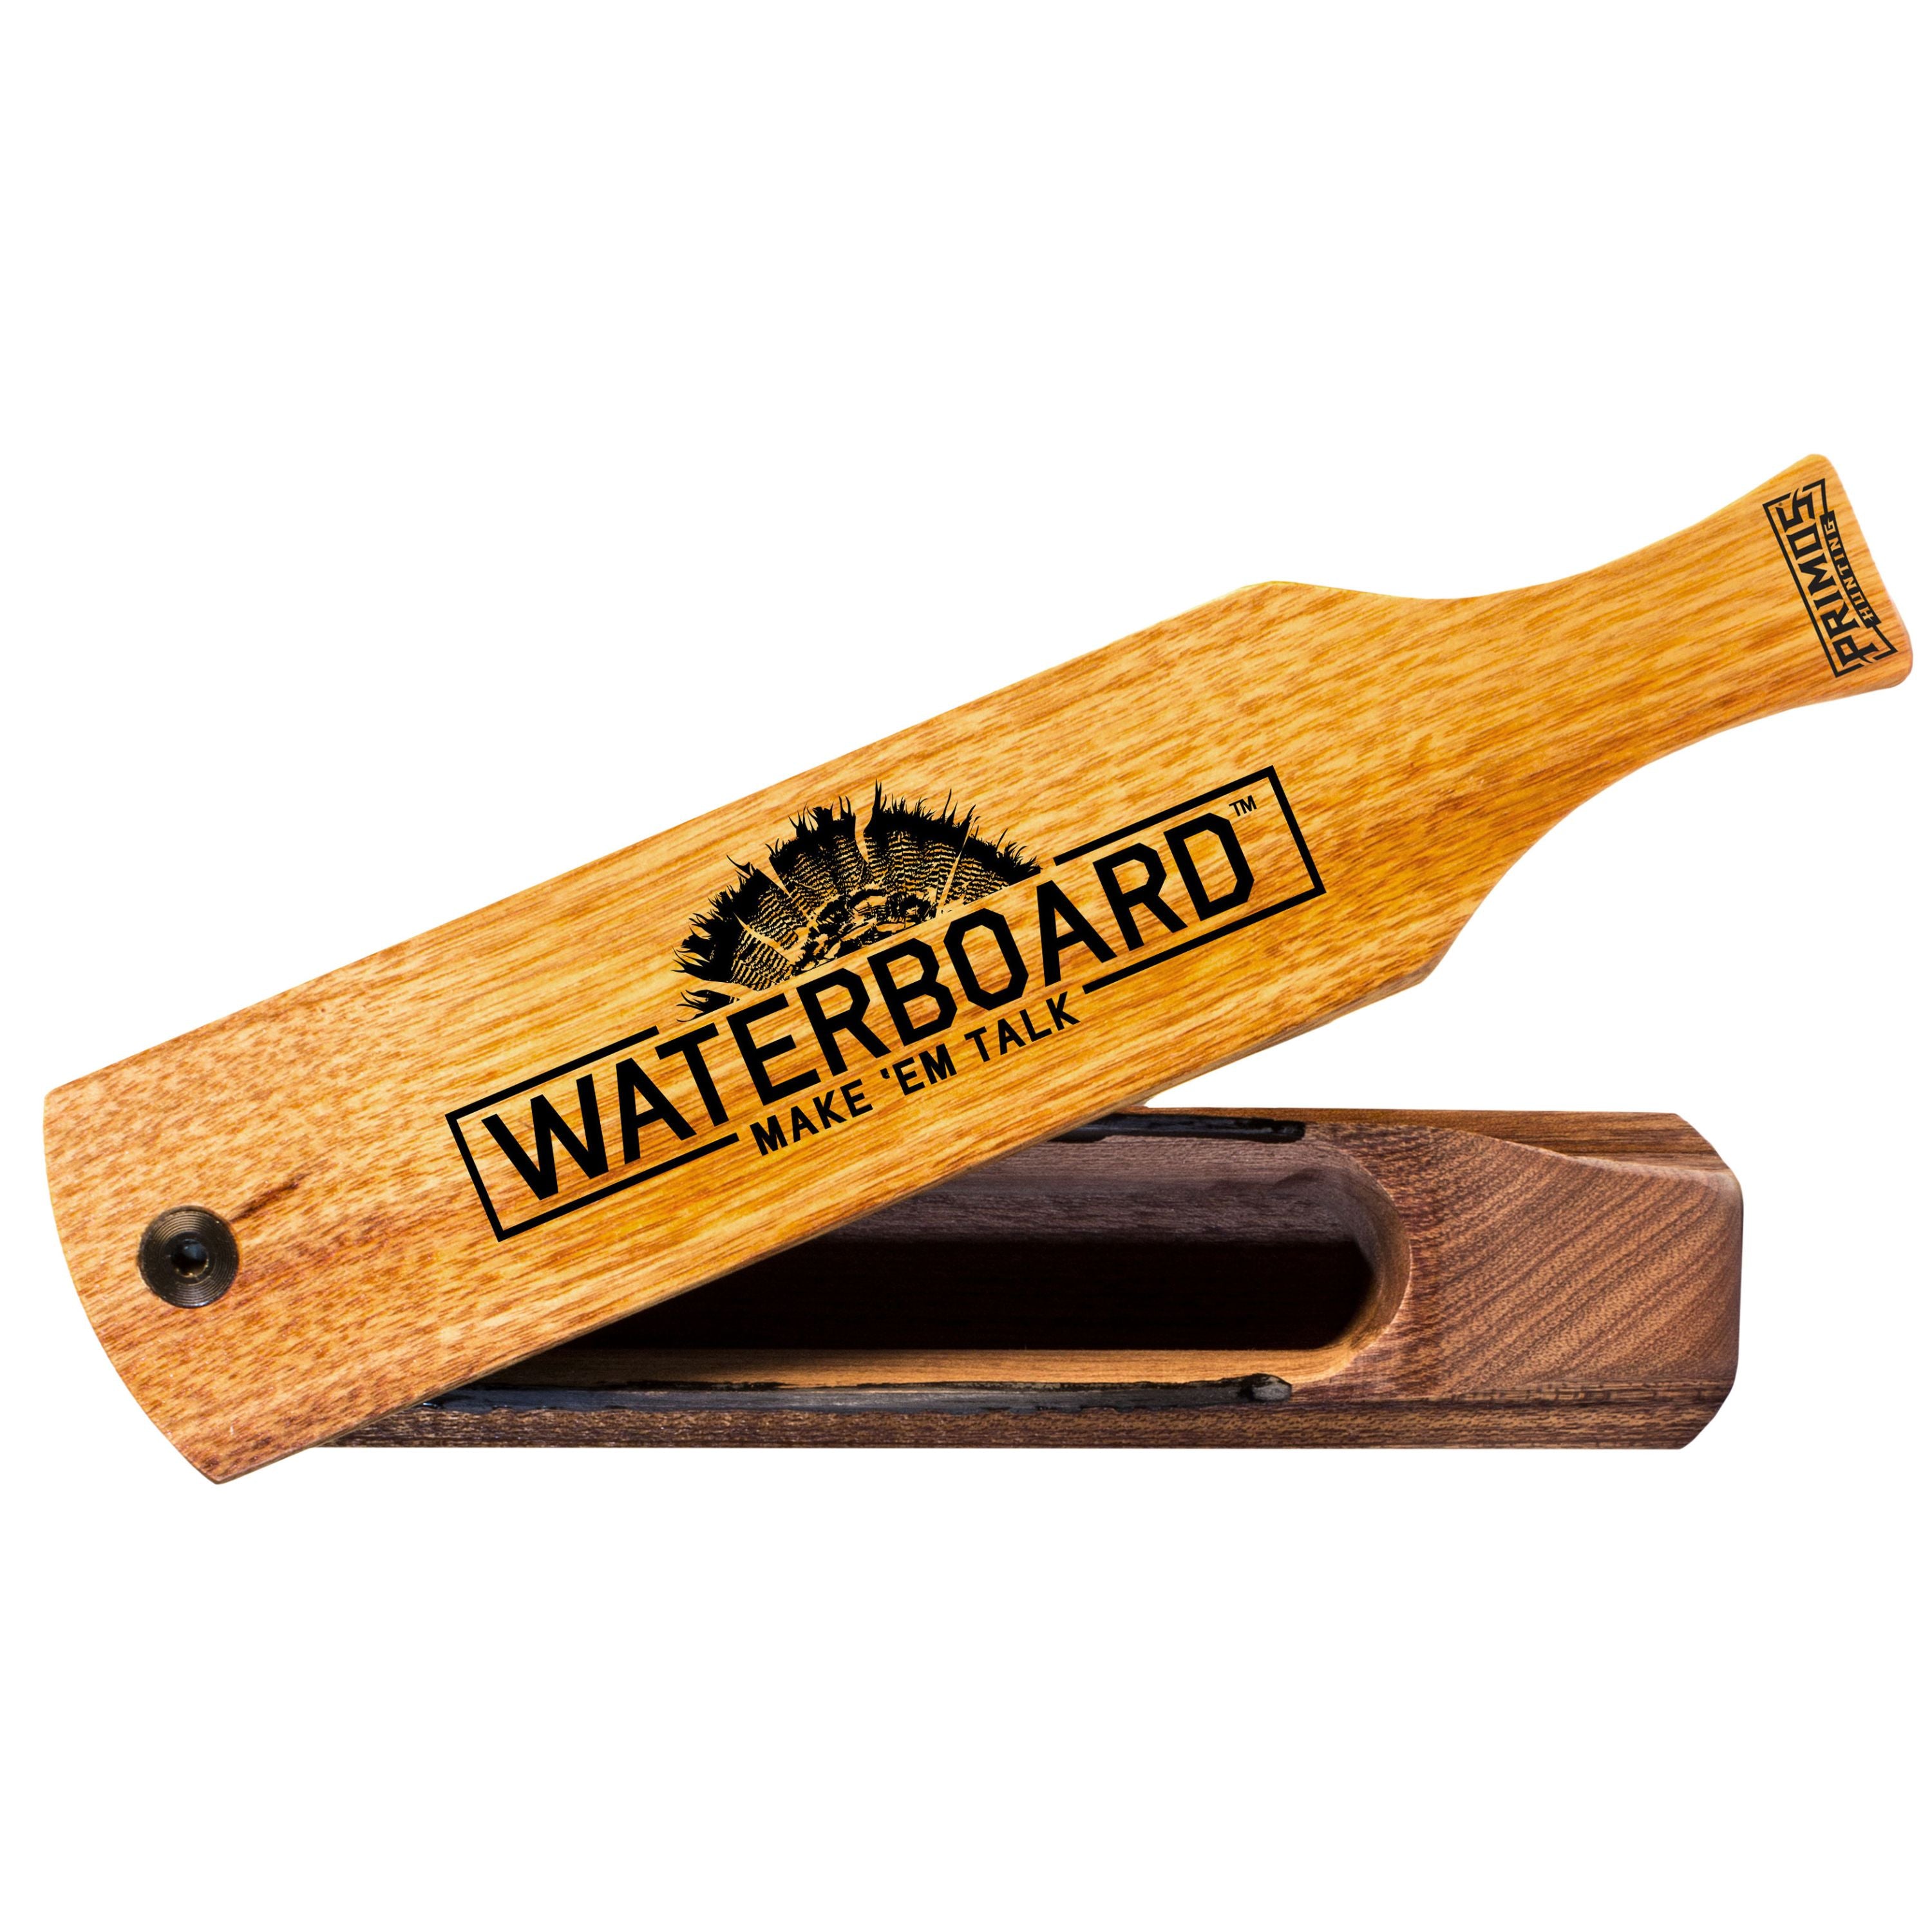 "Waterboard" Turkey box call